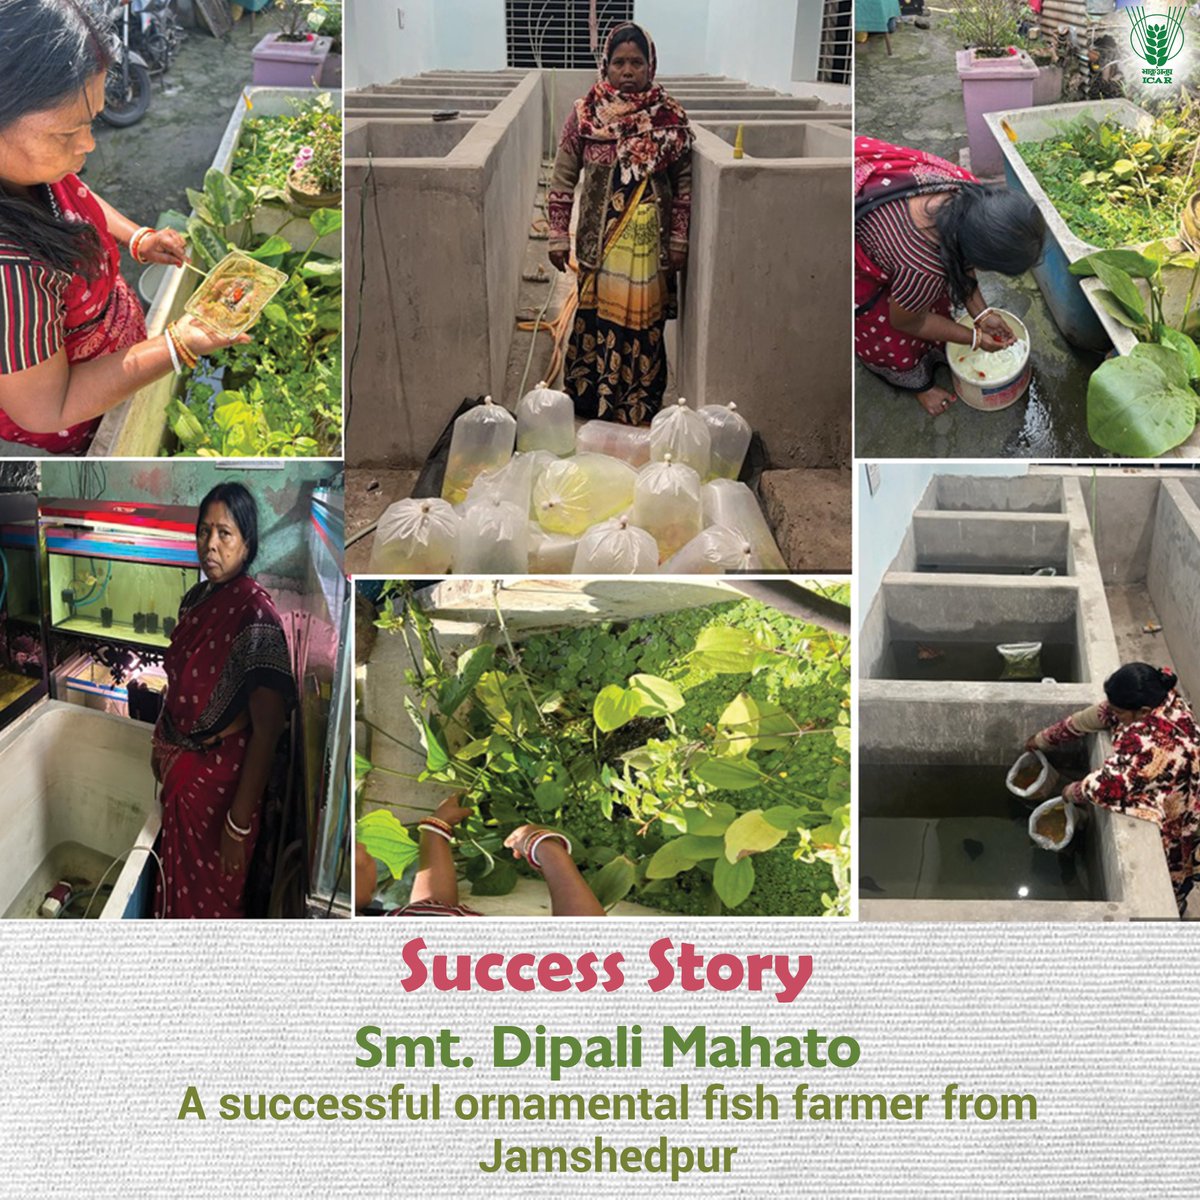 Smt. Dipali Mahato, a successful #ornamental #fish #farmer from Jamshedpur. #ICAR @PMOIndia @CimGOI @mygovindia @PIB_India @AgriGoI @DDKisanChannel @WorldFishCenter More details : icar.org.in/node/20685